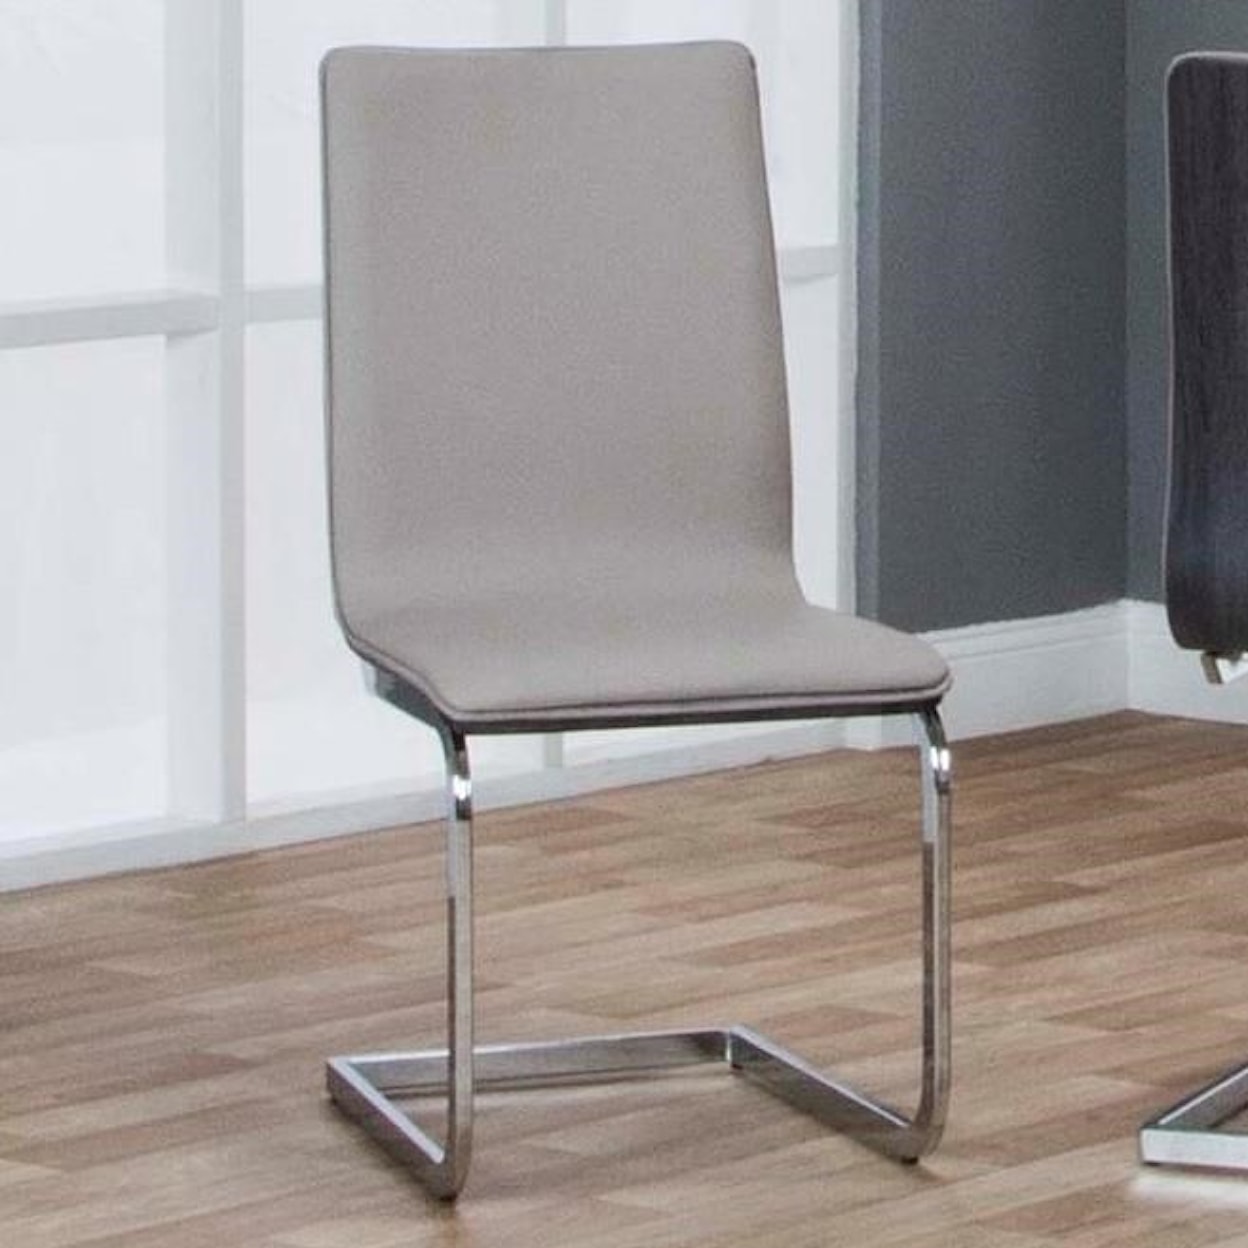 Cramco, Inc Holden Champagne/Charcoal Woodgrain Side Chair